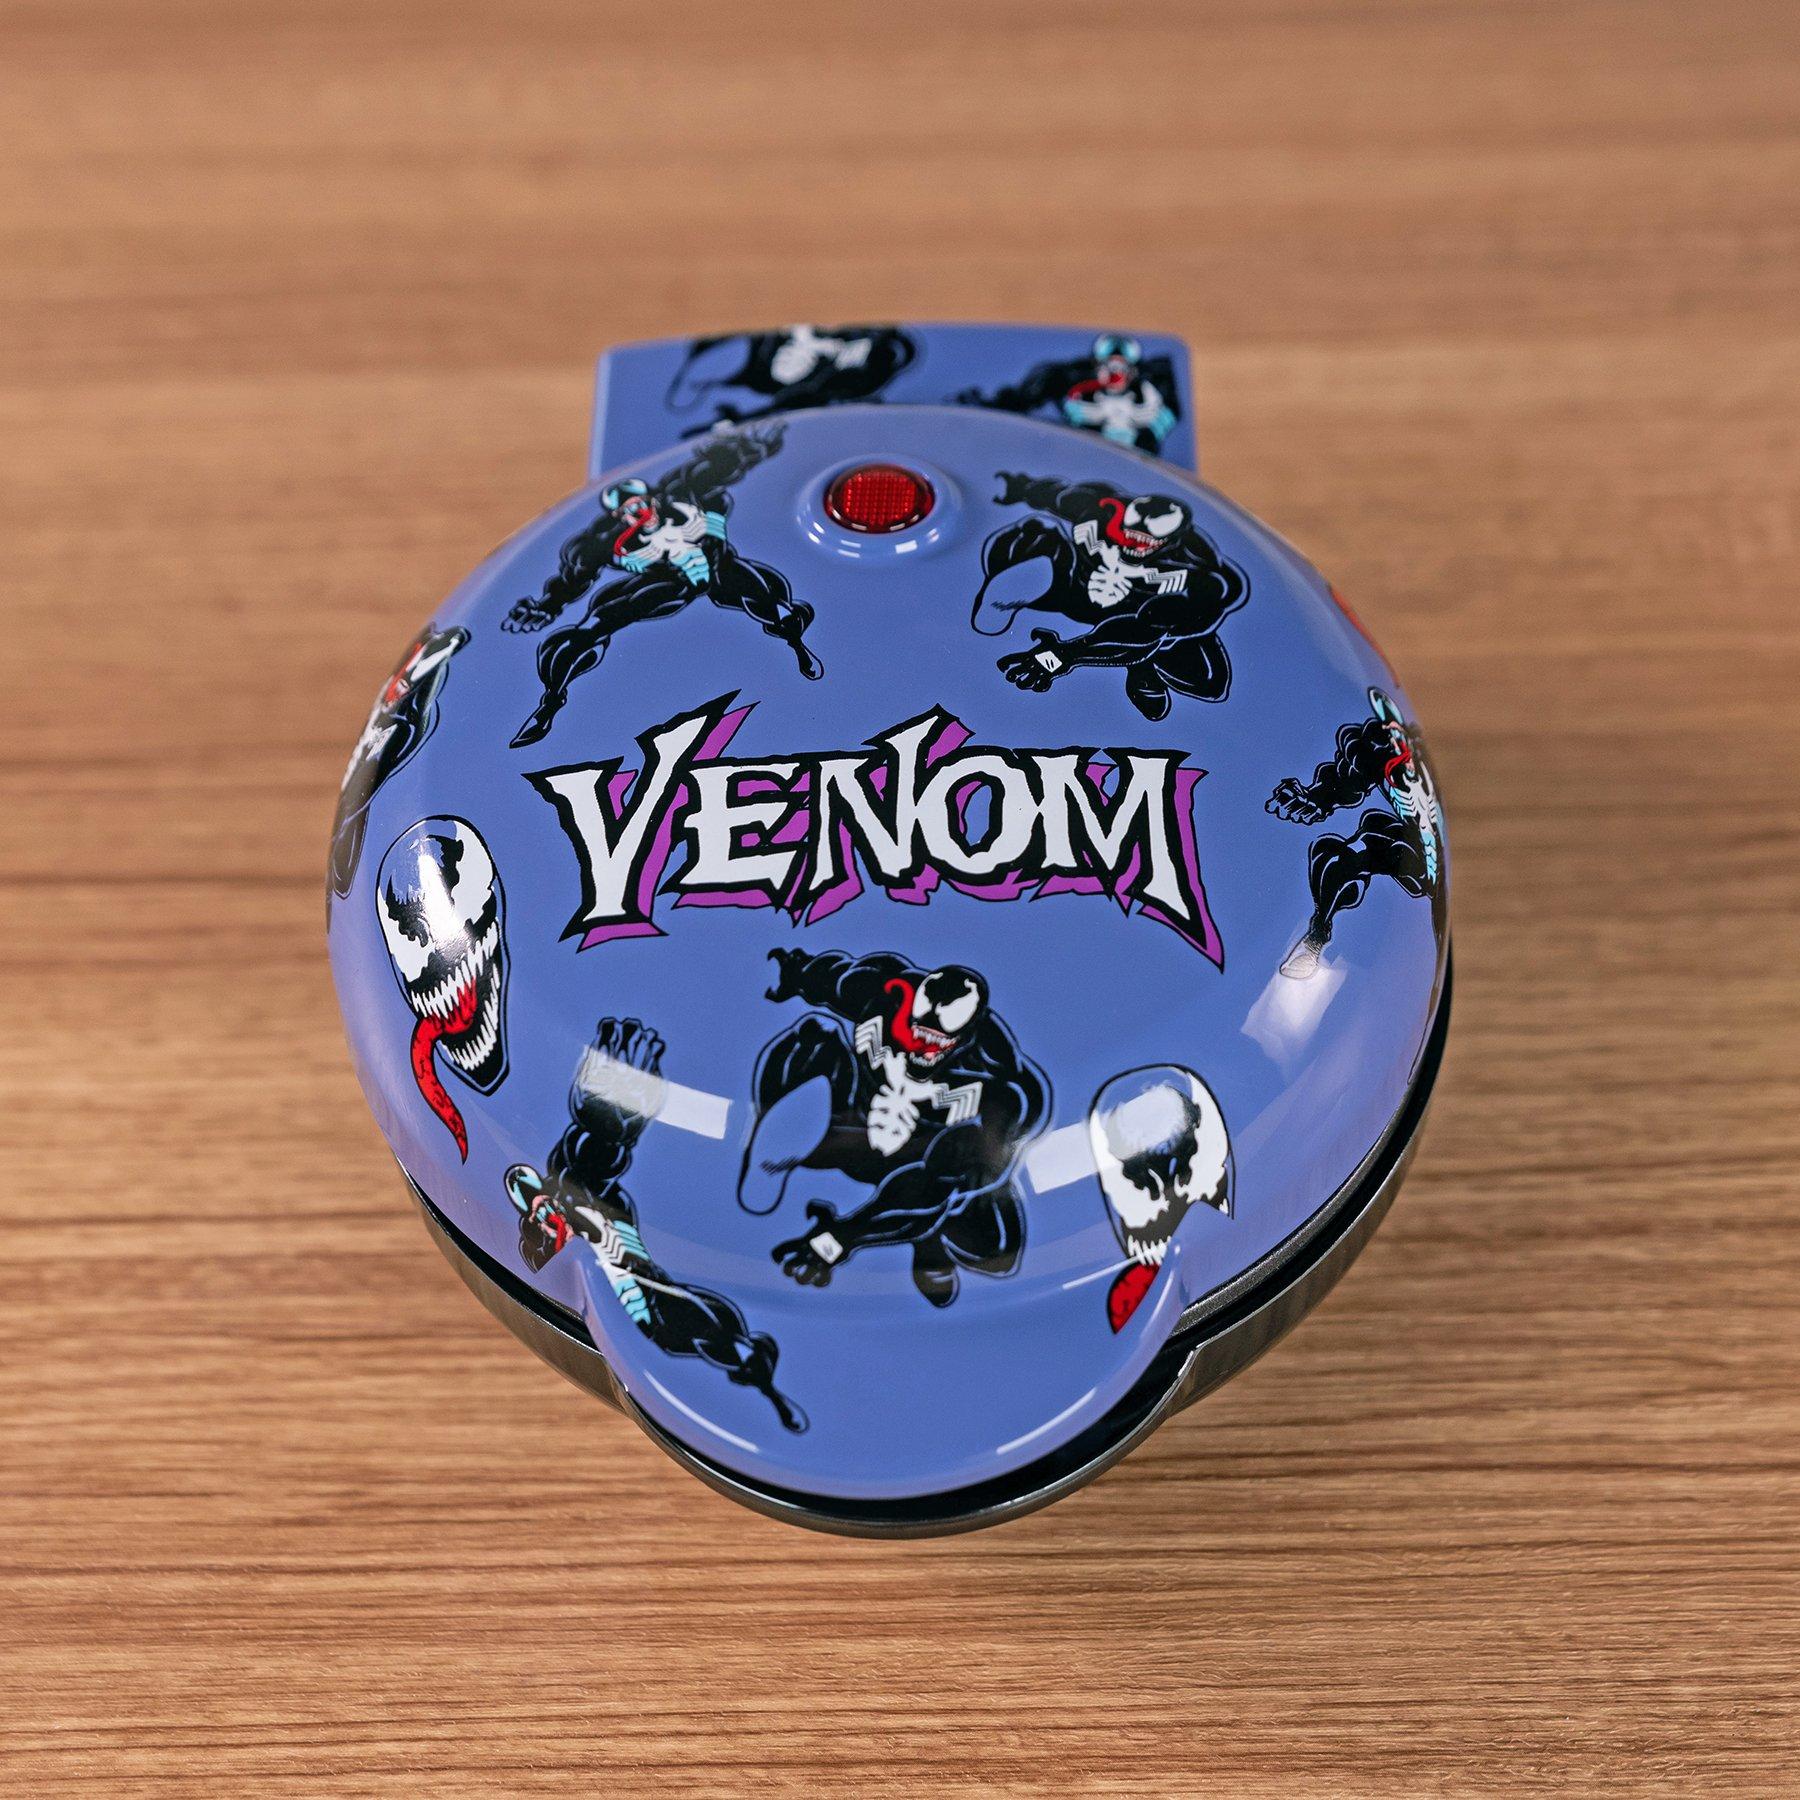 Uncanny Brands Marvel's Venom Waffle Maker